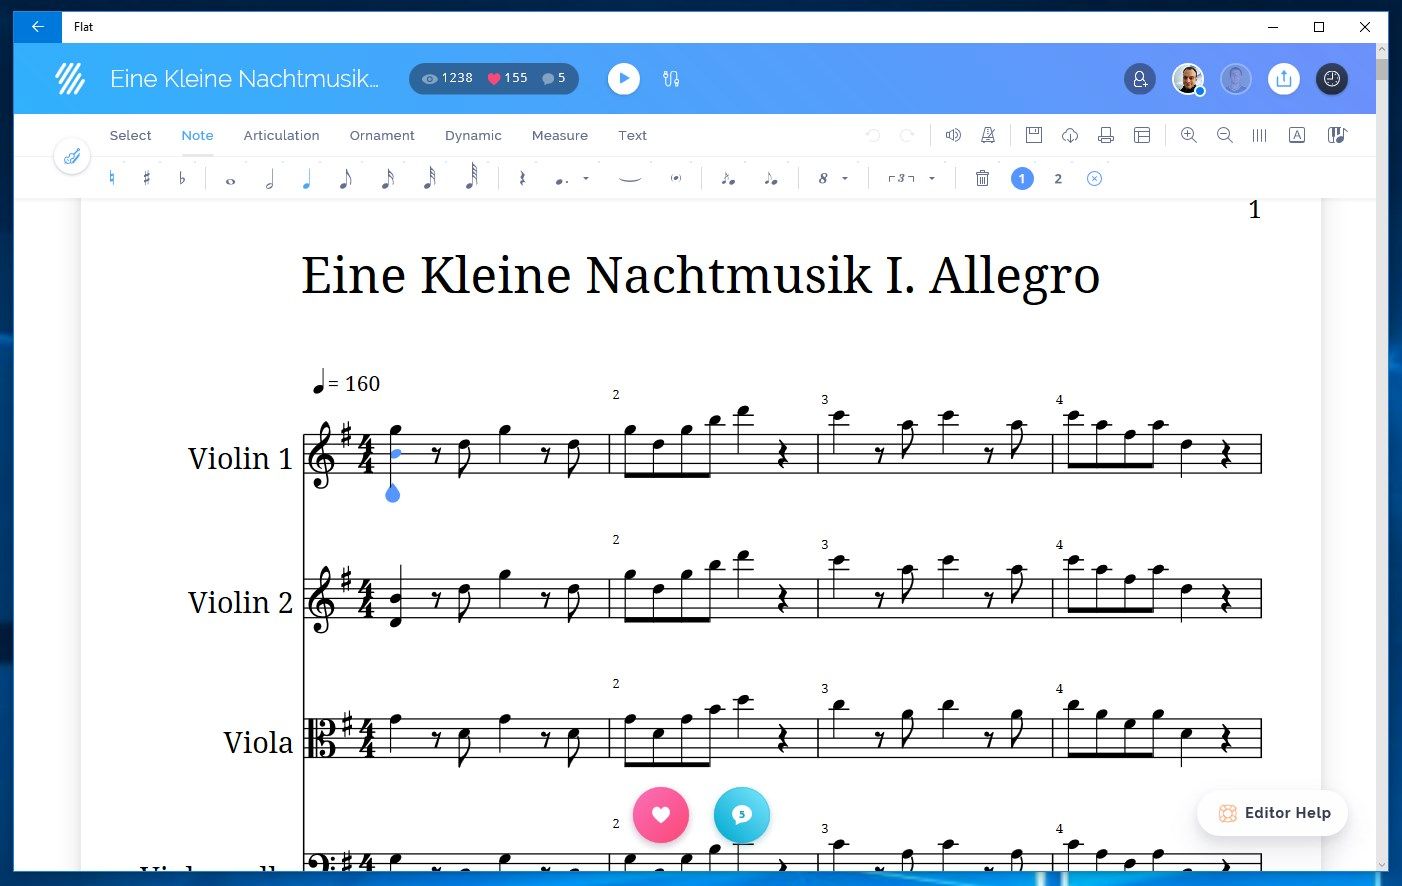 Flat - Music notation editor